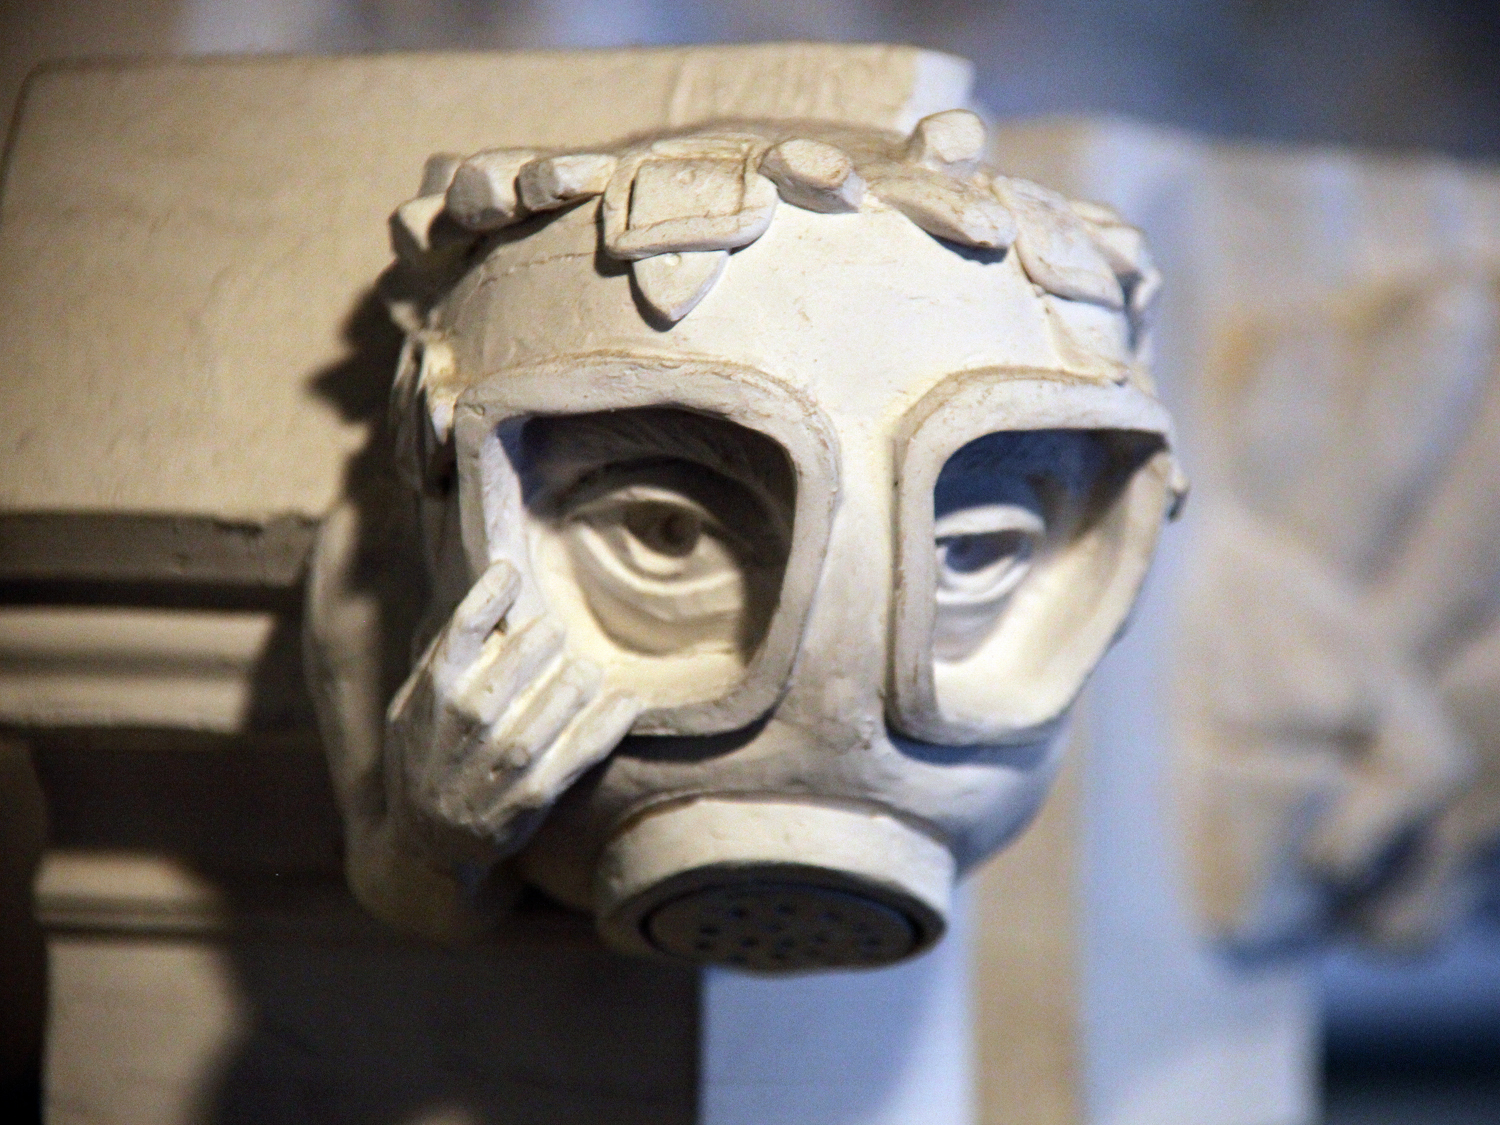 "Gas Mask Gargolyle - Washington National Cathedral" photo by Tim Evanson CC BY-SA 2.0